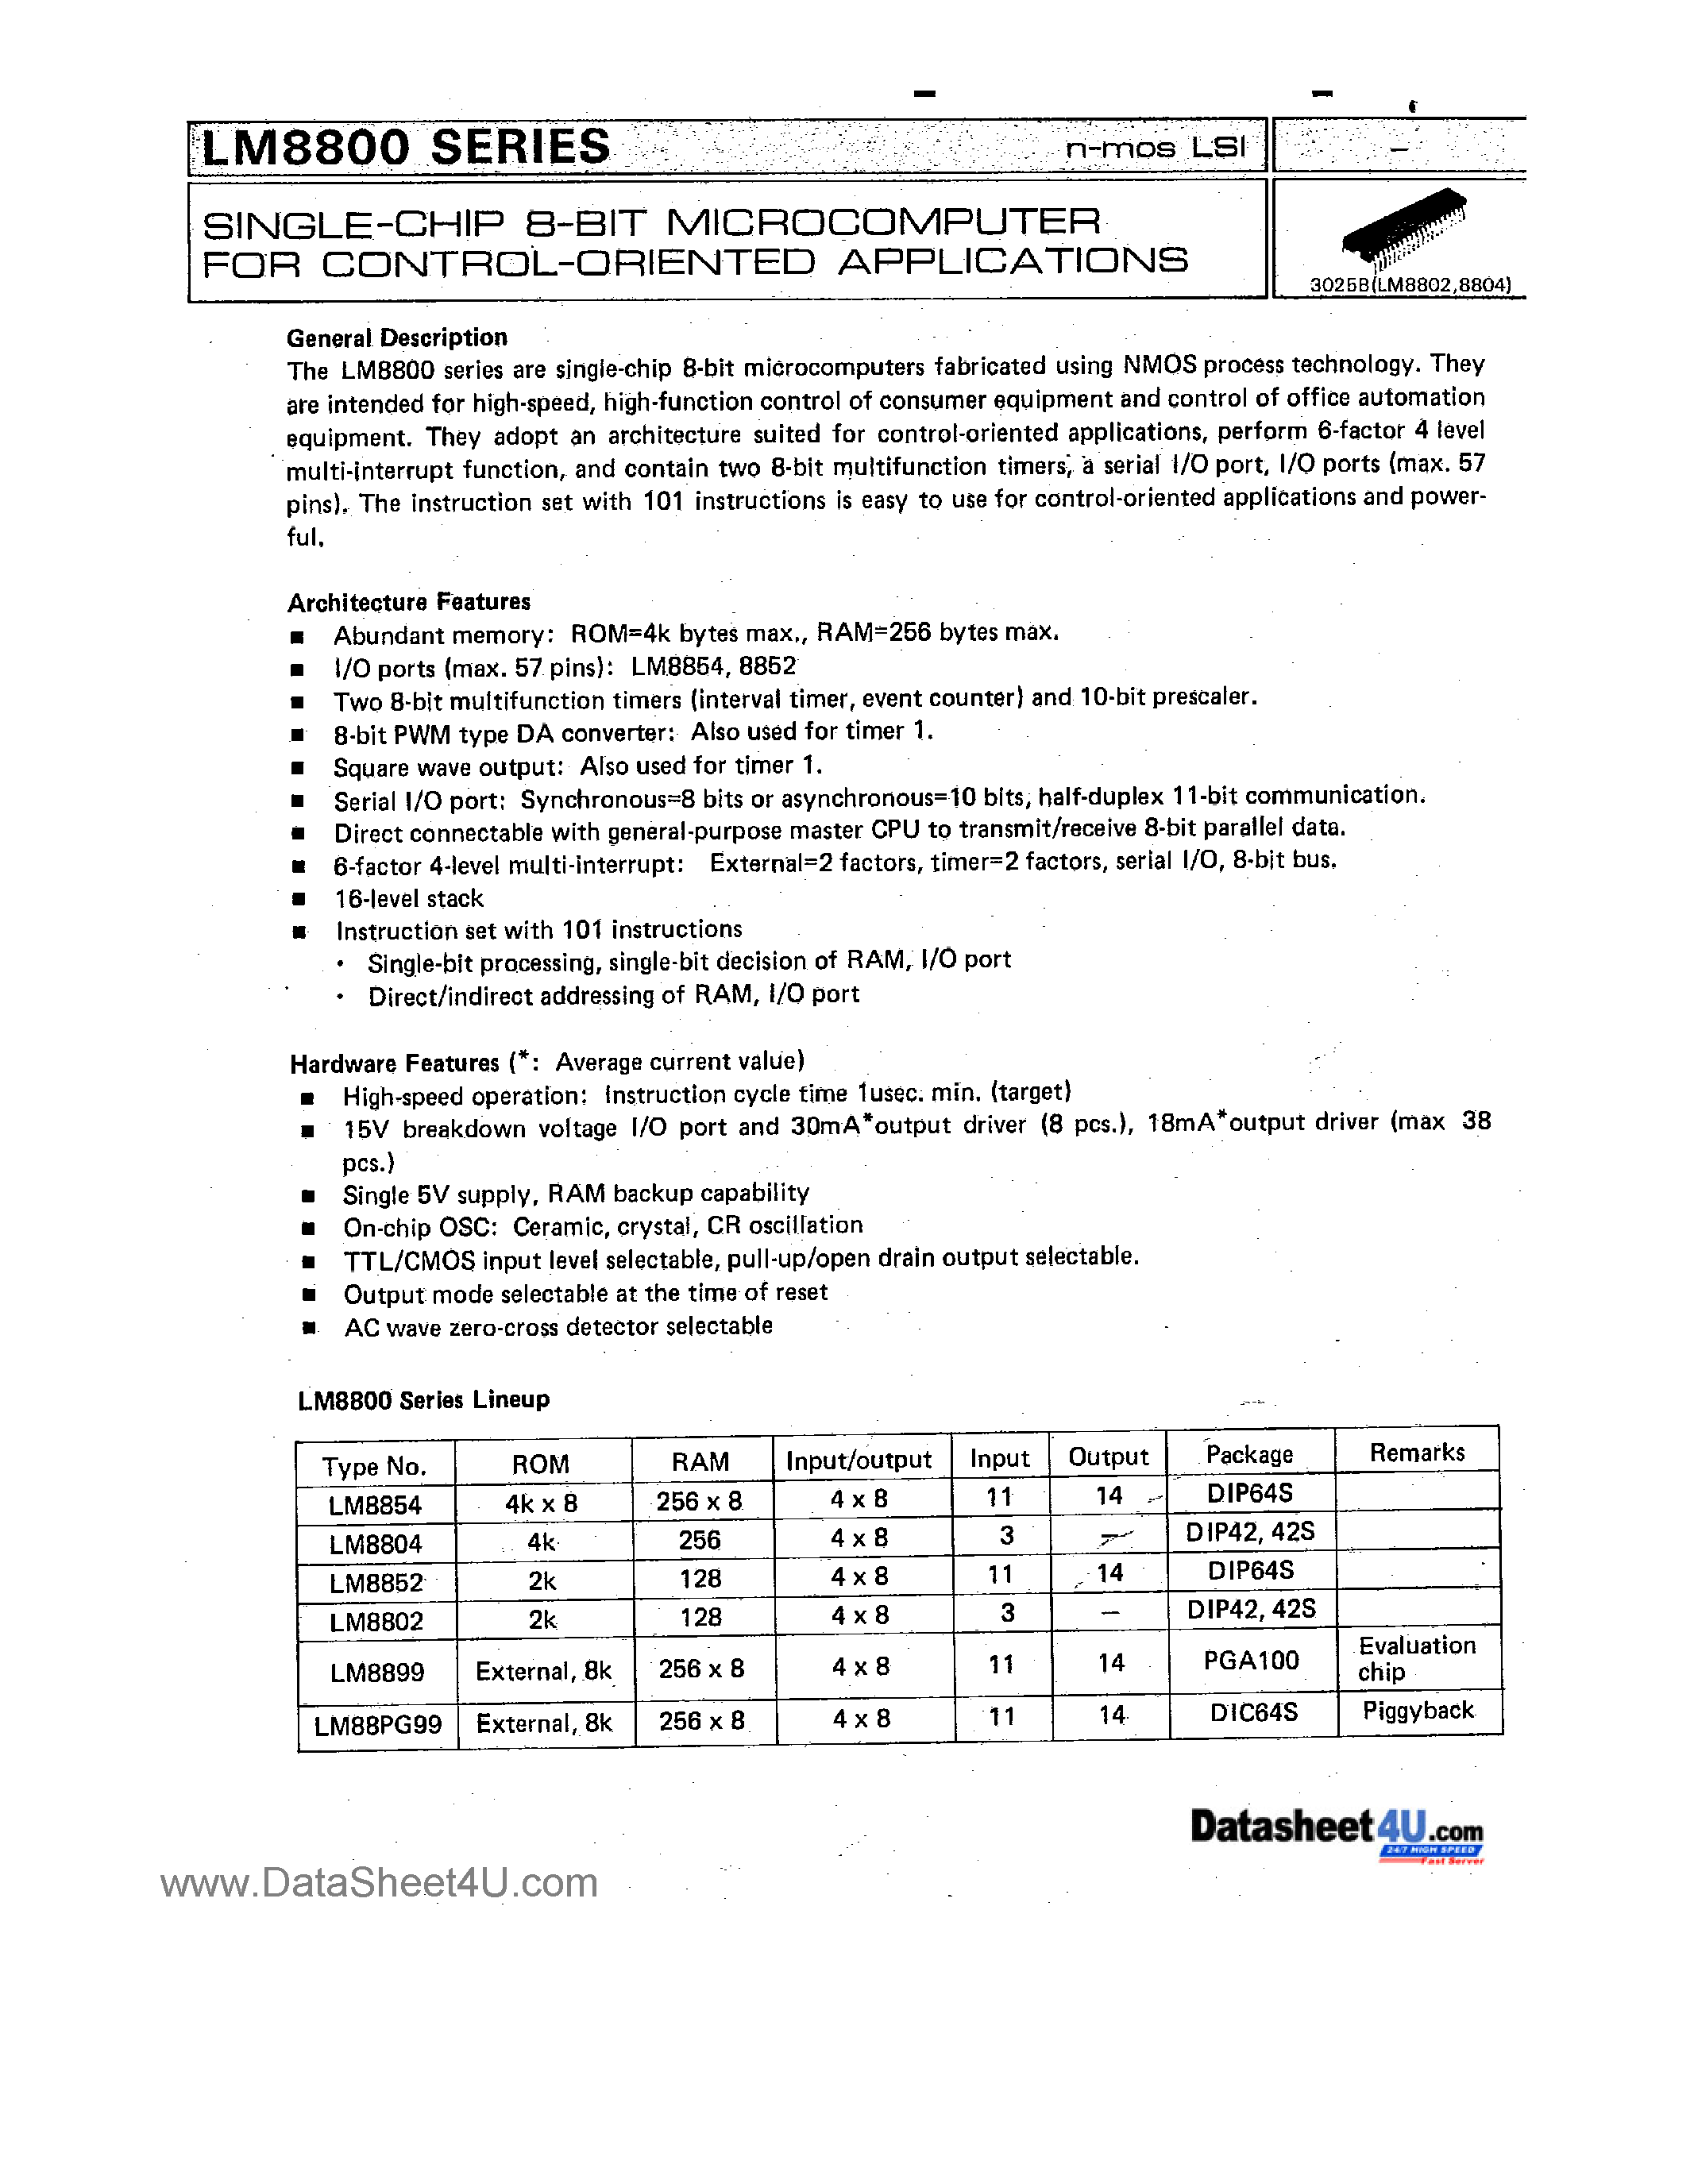 Datasheet LM8802 - (LM8800 Series) Single-Chip 8-Bit Microcomputer page 1